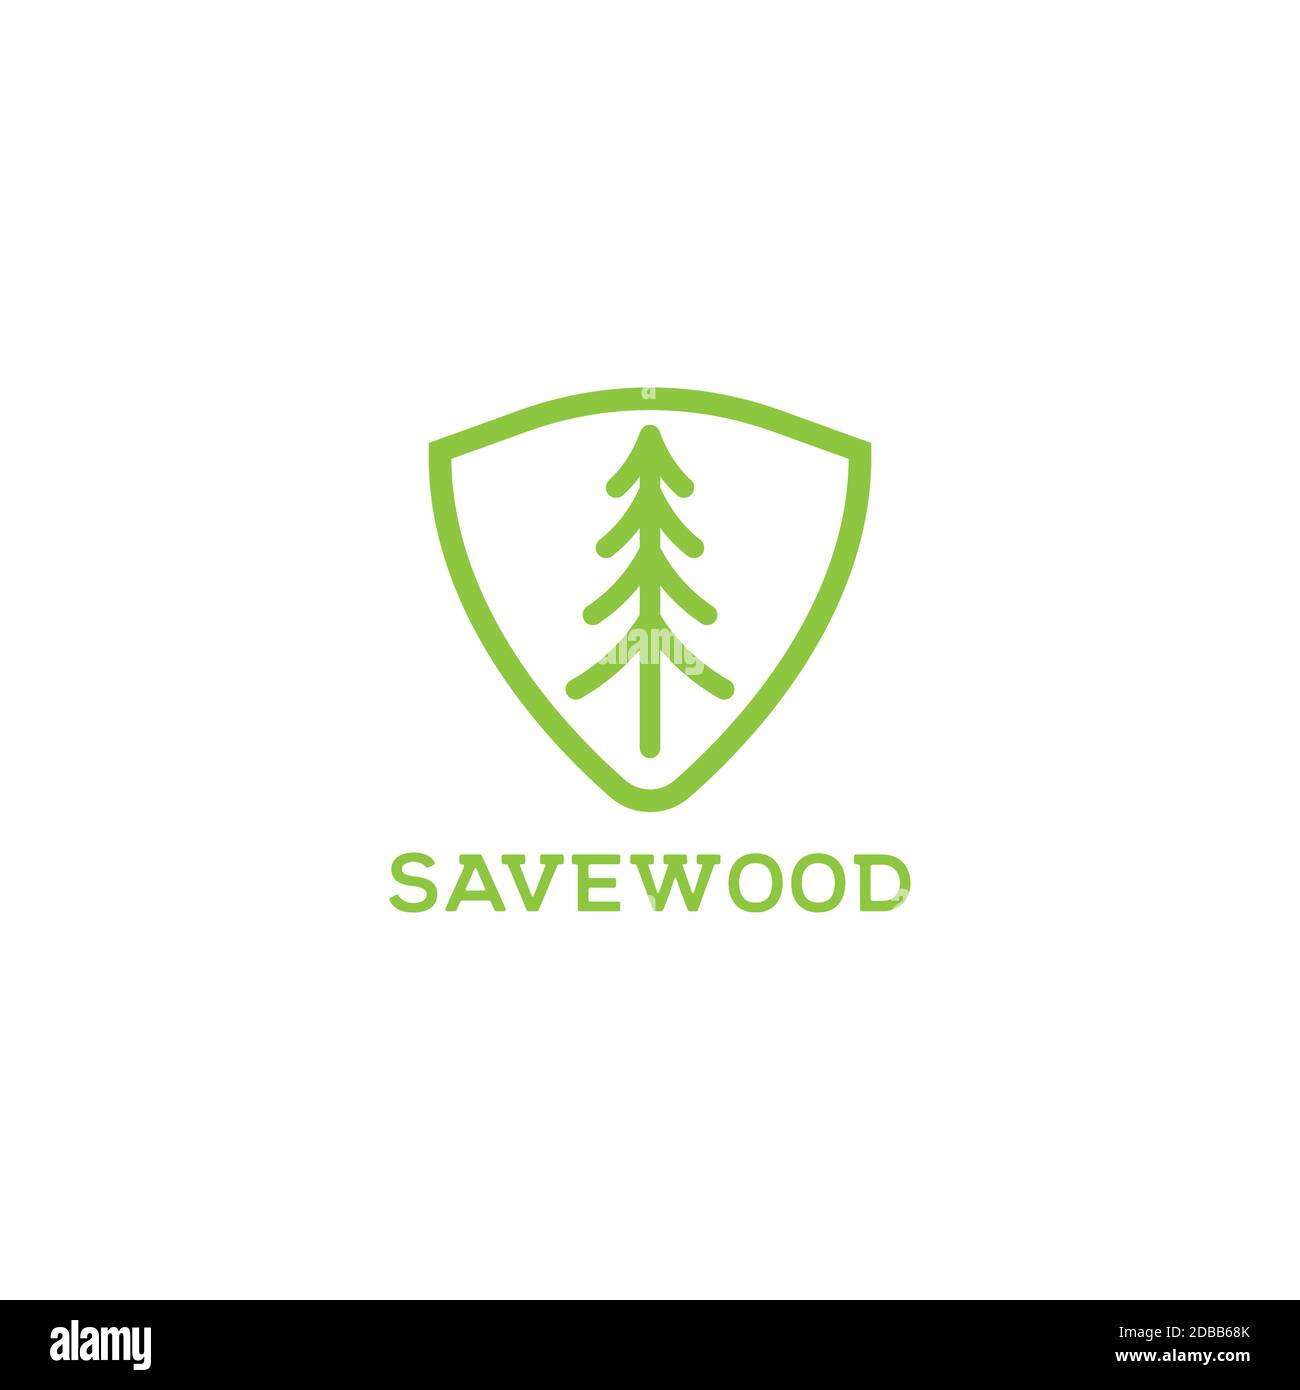 Speichern Holz Illustration Logo Design Vektor Vorlage.Schild mit Baum-Symbol Stock Vektor